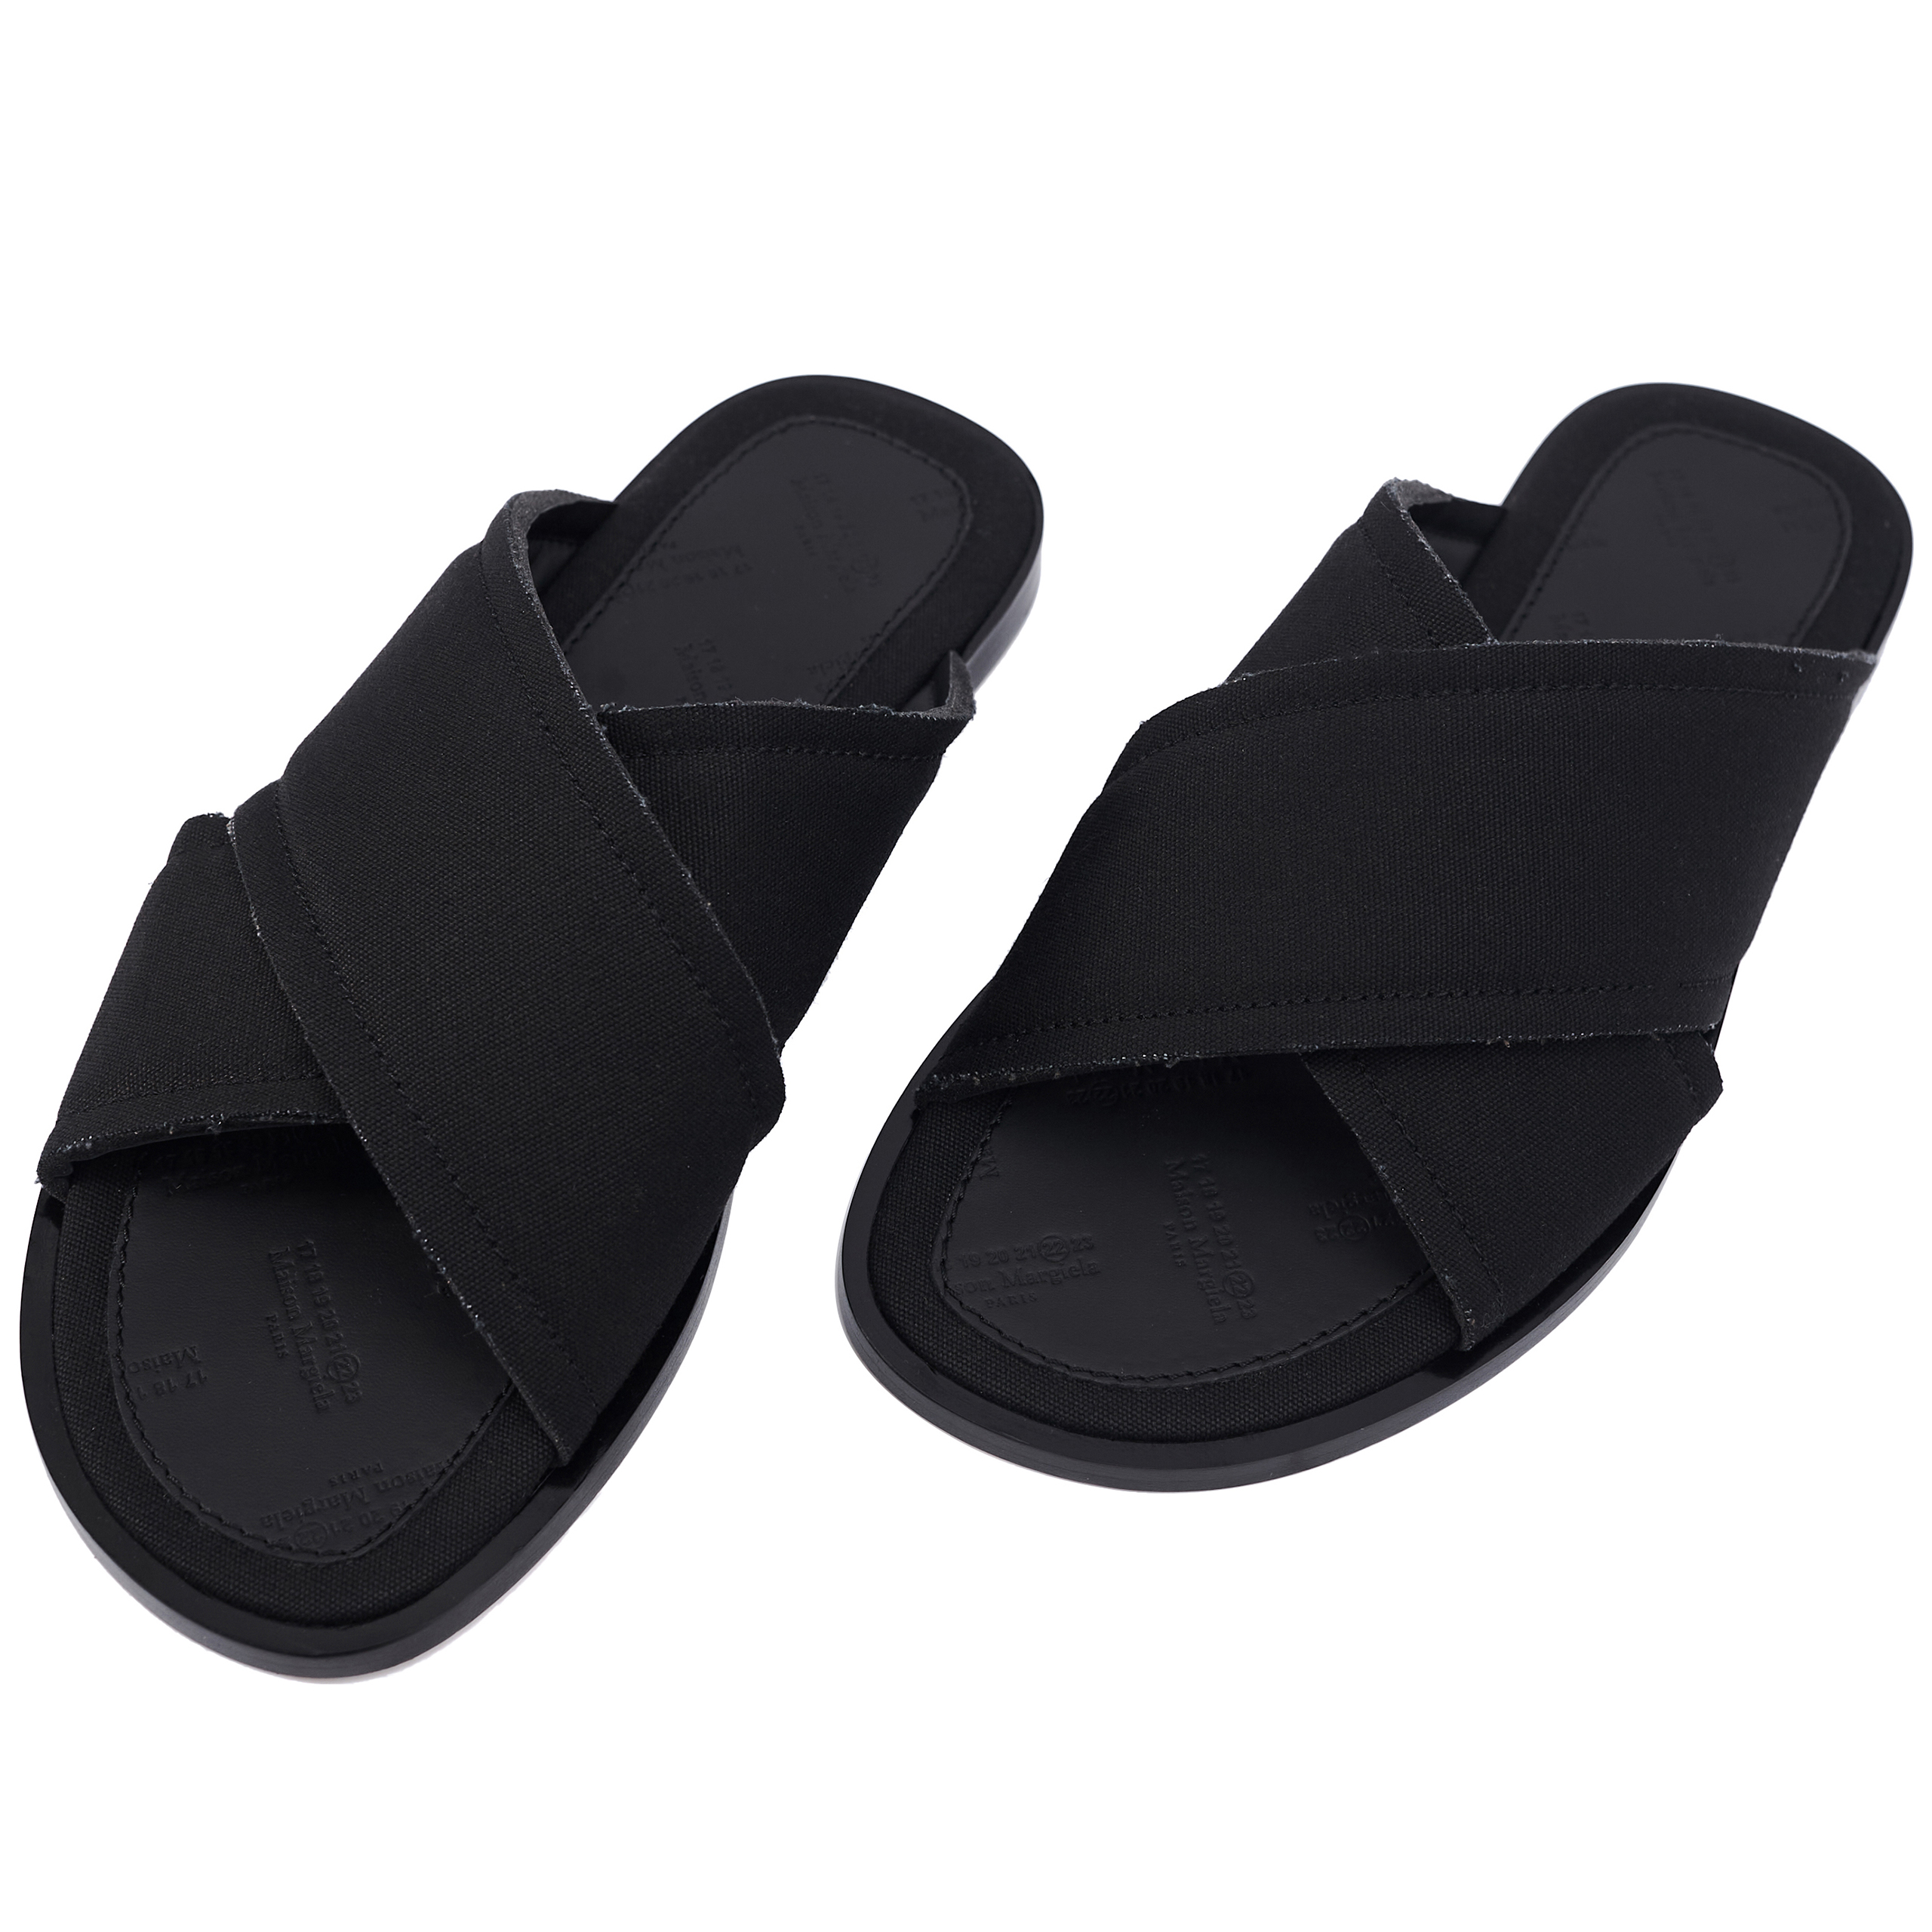 Buy Maison Margiela men black canvas sandals for $468 online on 